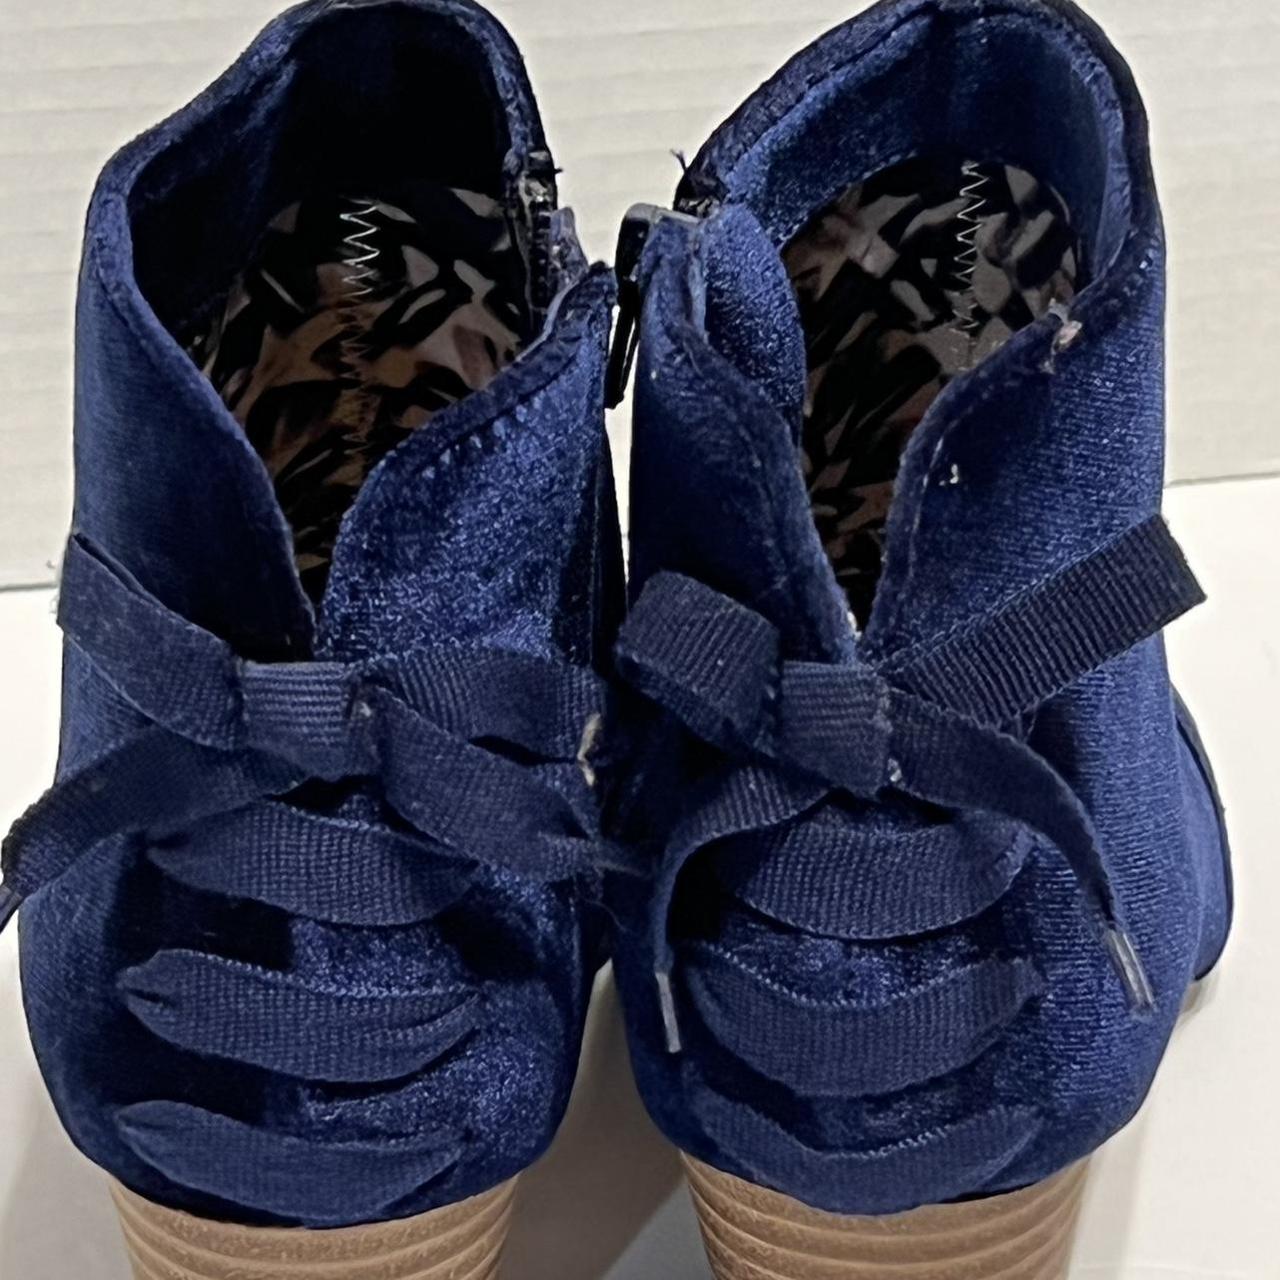 Women Blue velvet ankle boots size 6 brand name is... - Depop